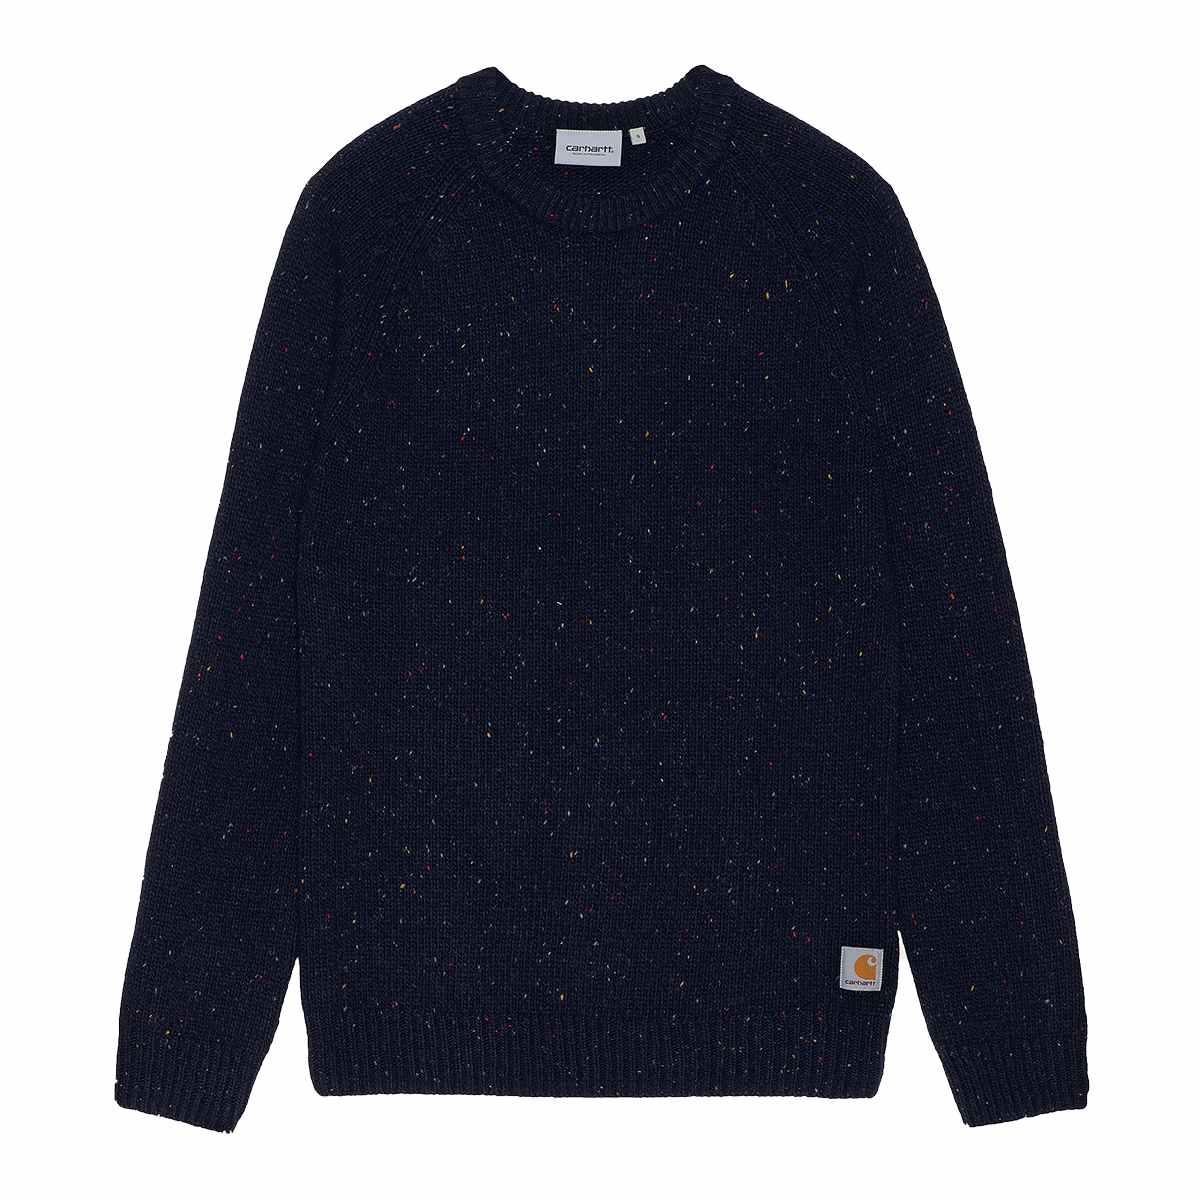 Pullover Uomo CH Anglistic Sweater CARHARTT WIP